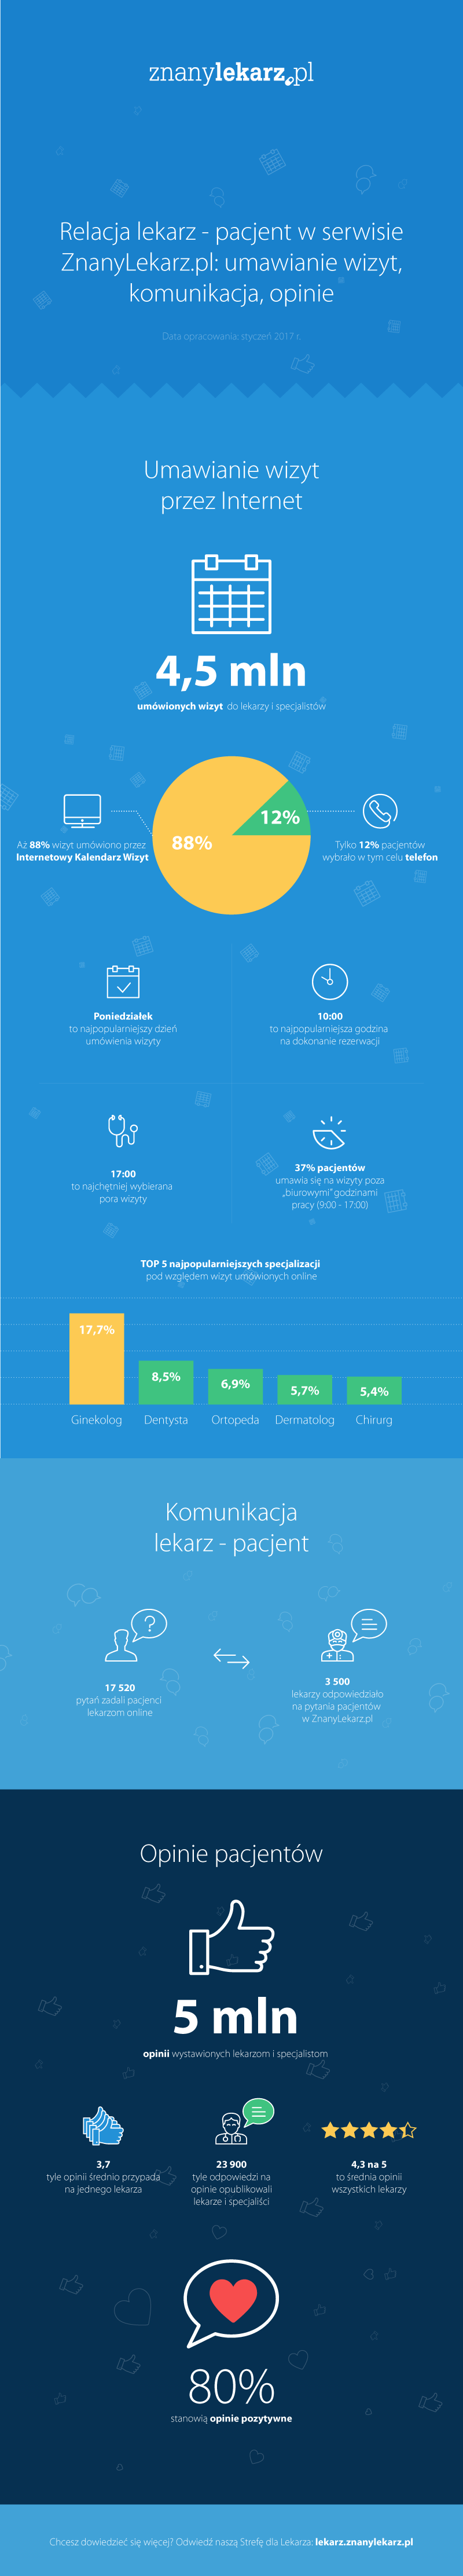 infografika_v3.png